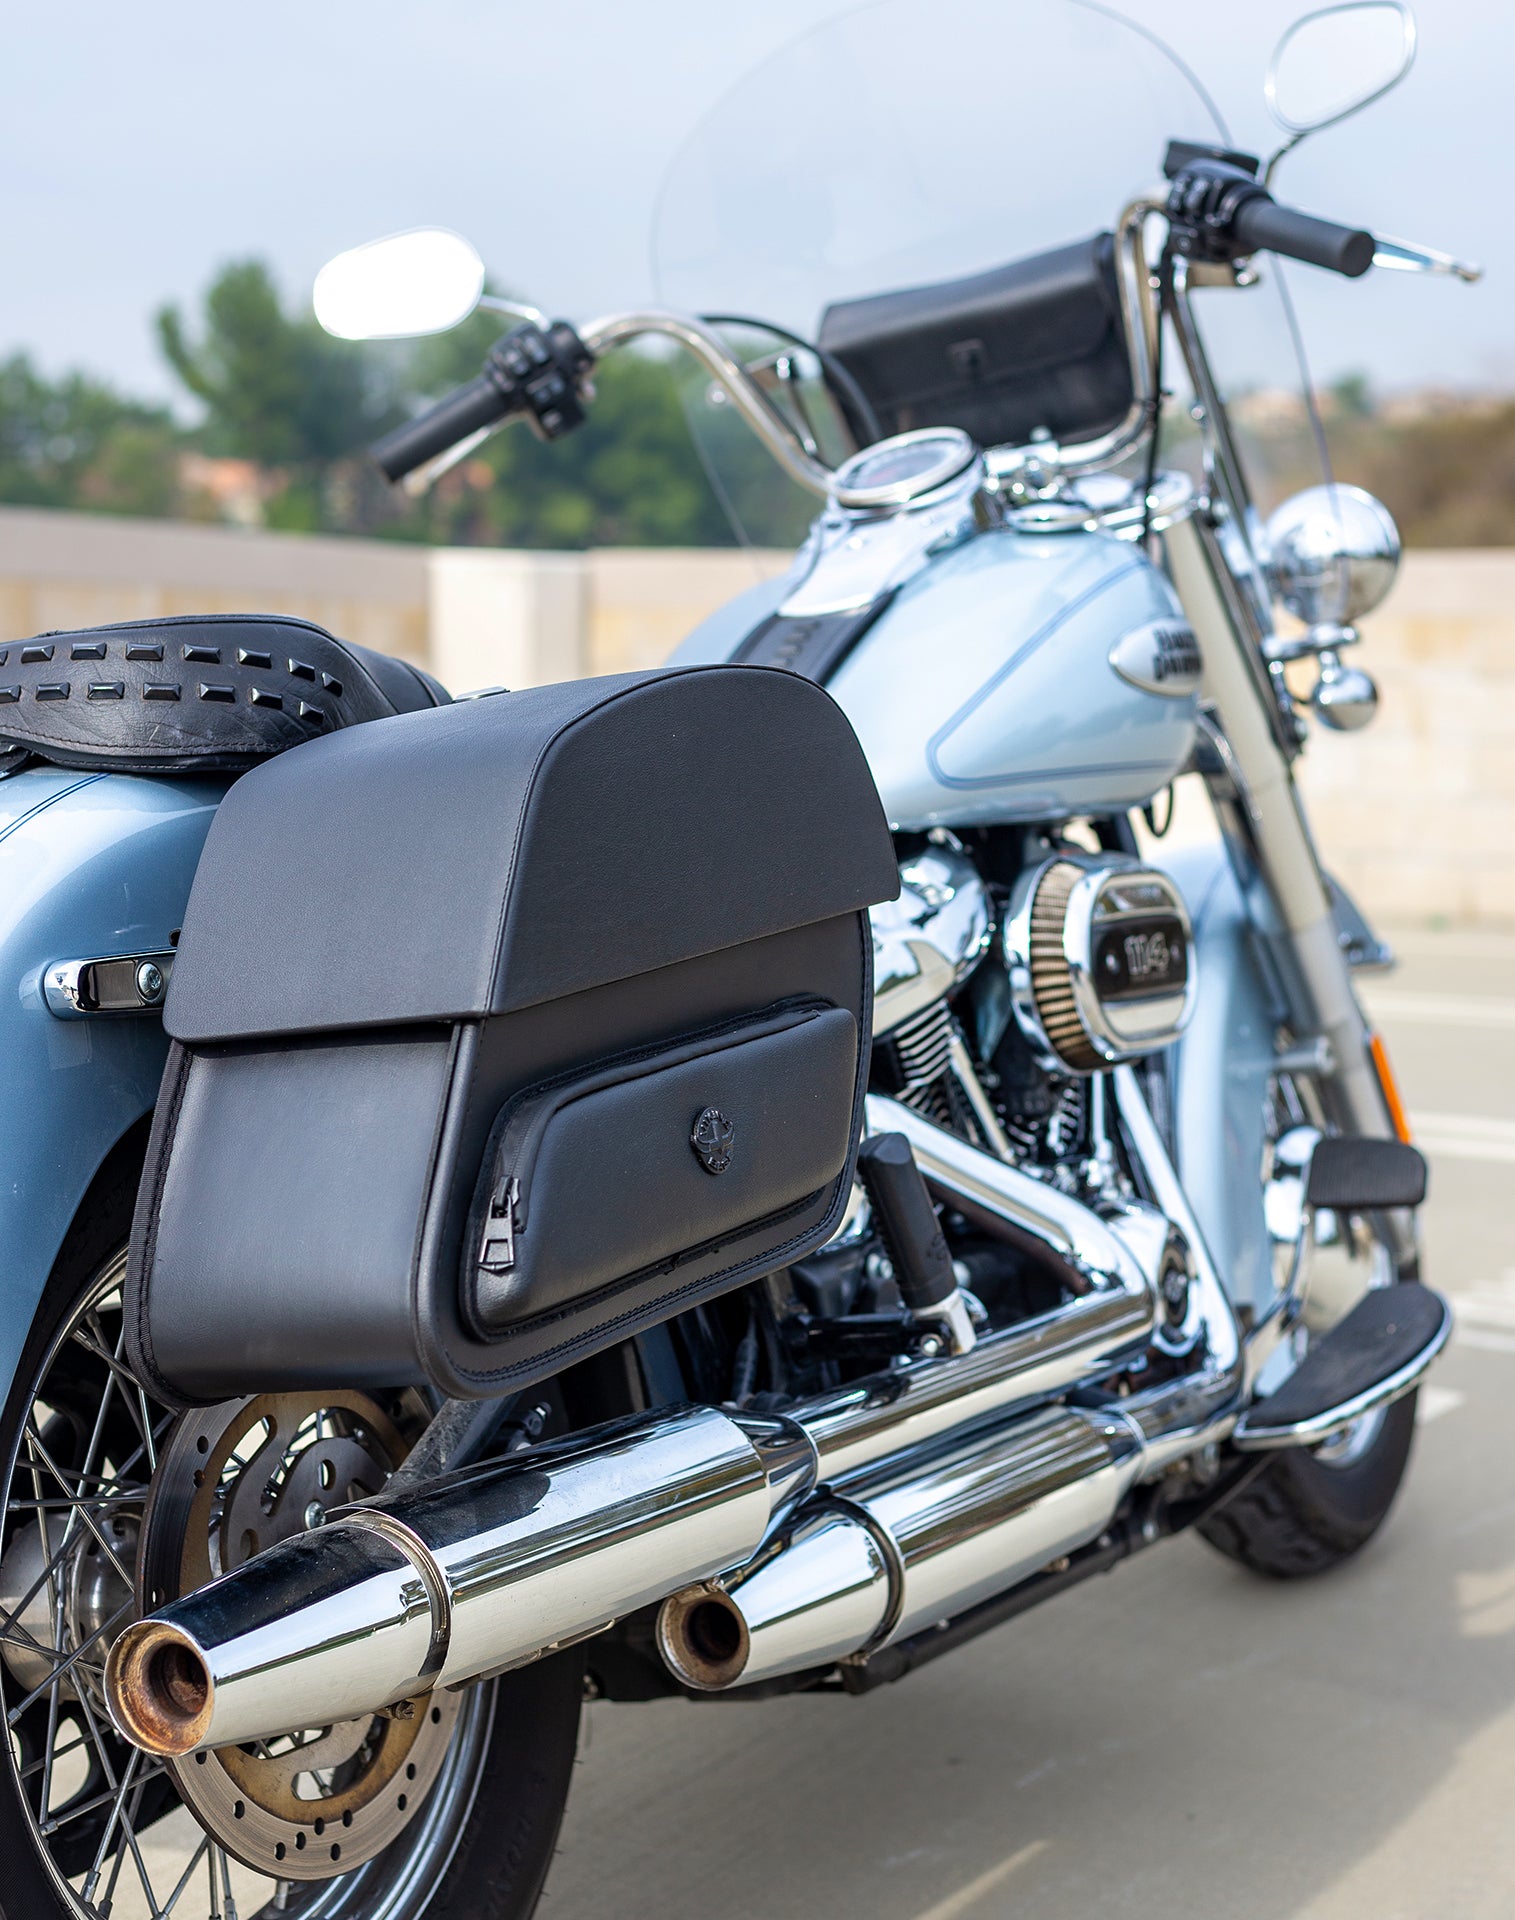 Viking Pantheon Medium Leather Motorcycle Saddlebags For Harley Davidson Softail Heritage Flst I C Ci are Durable